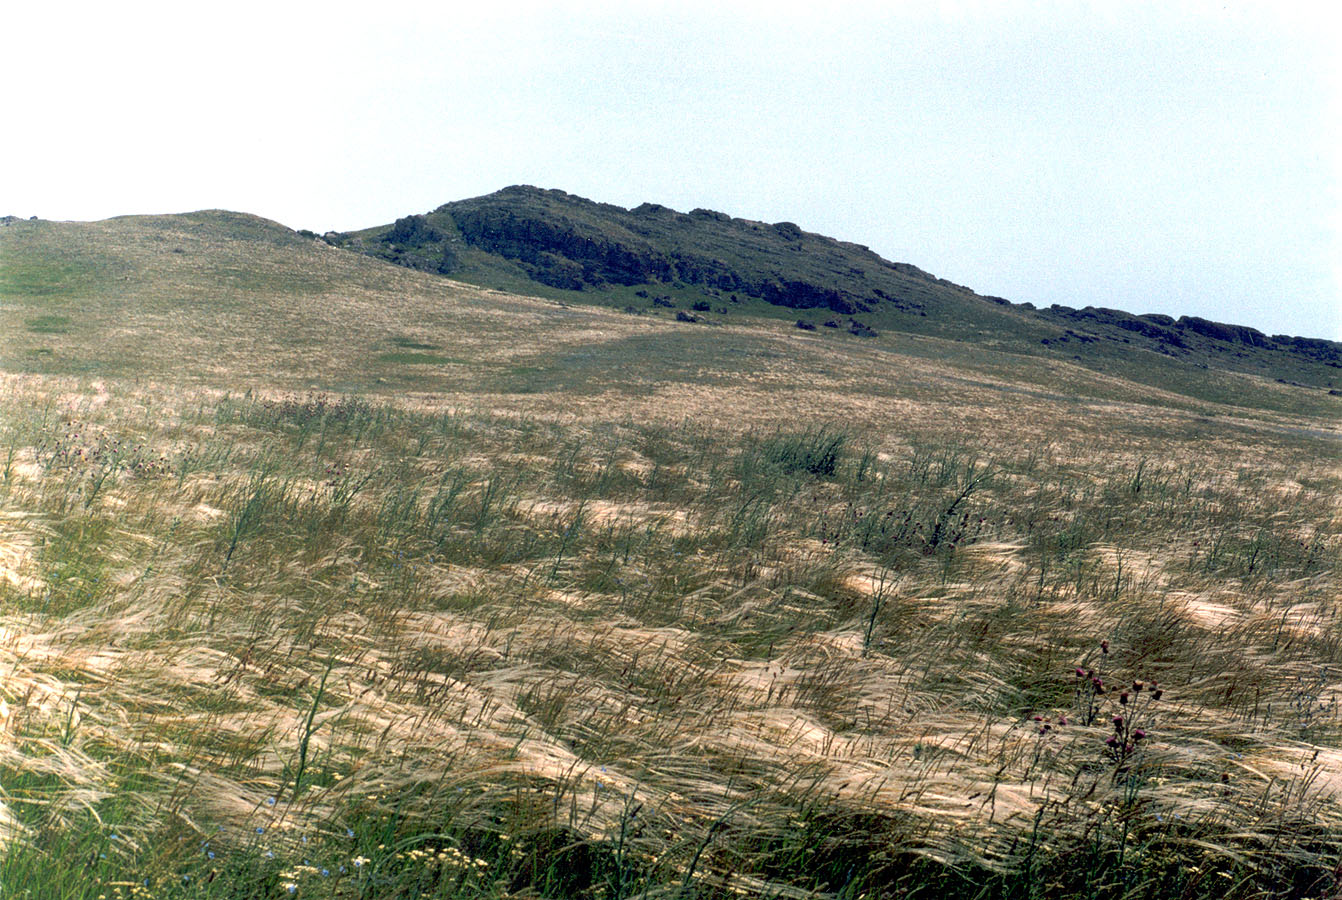 Опук, image of landscape/habitat.